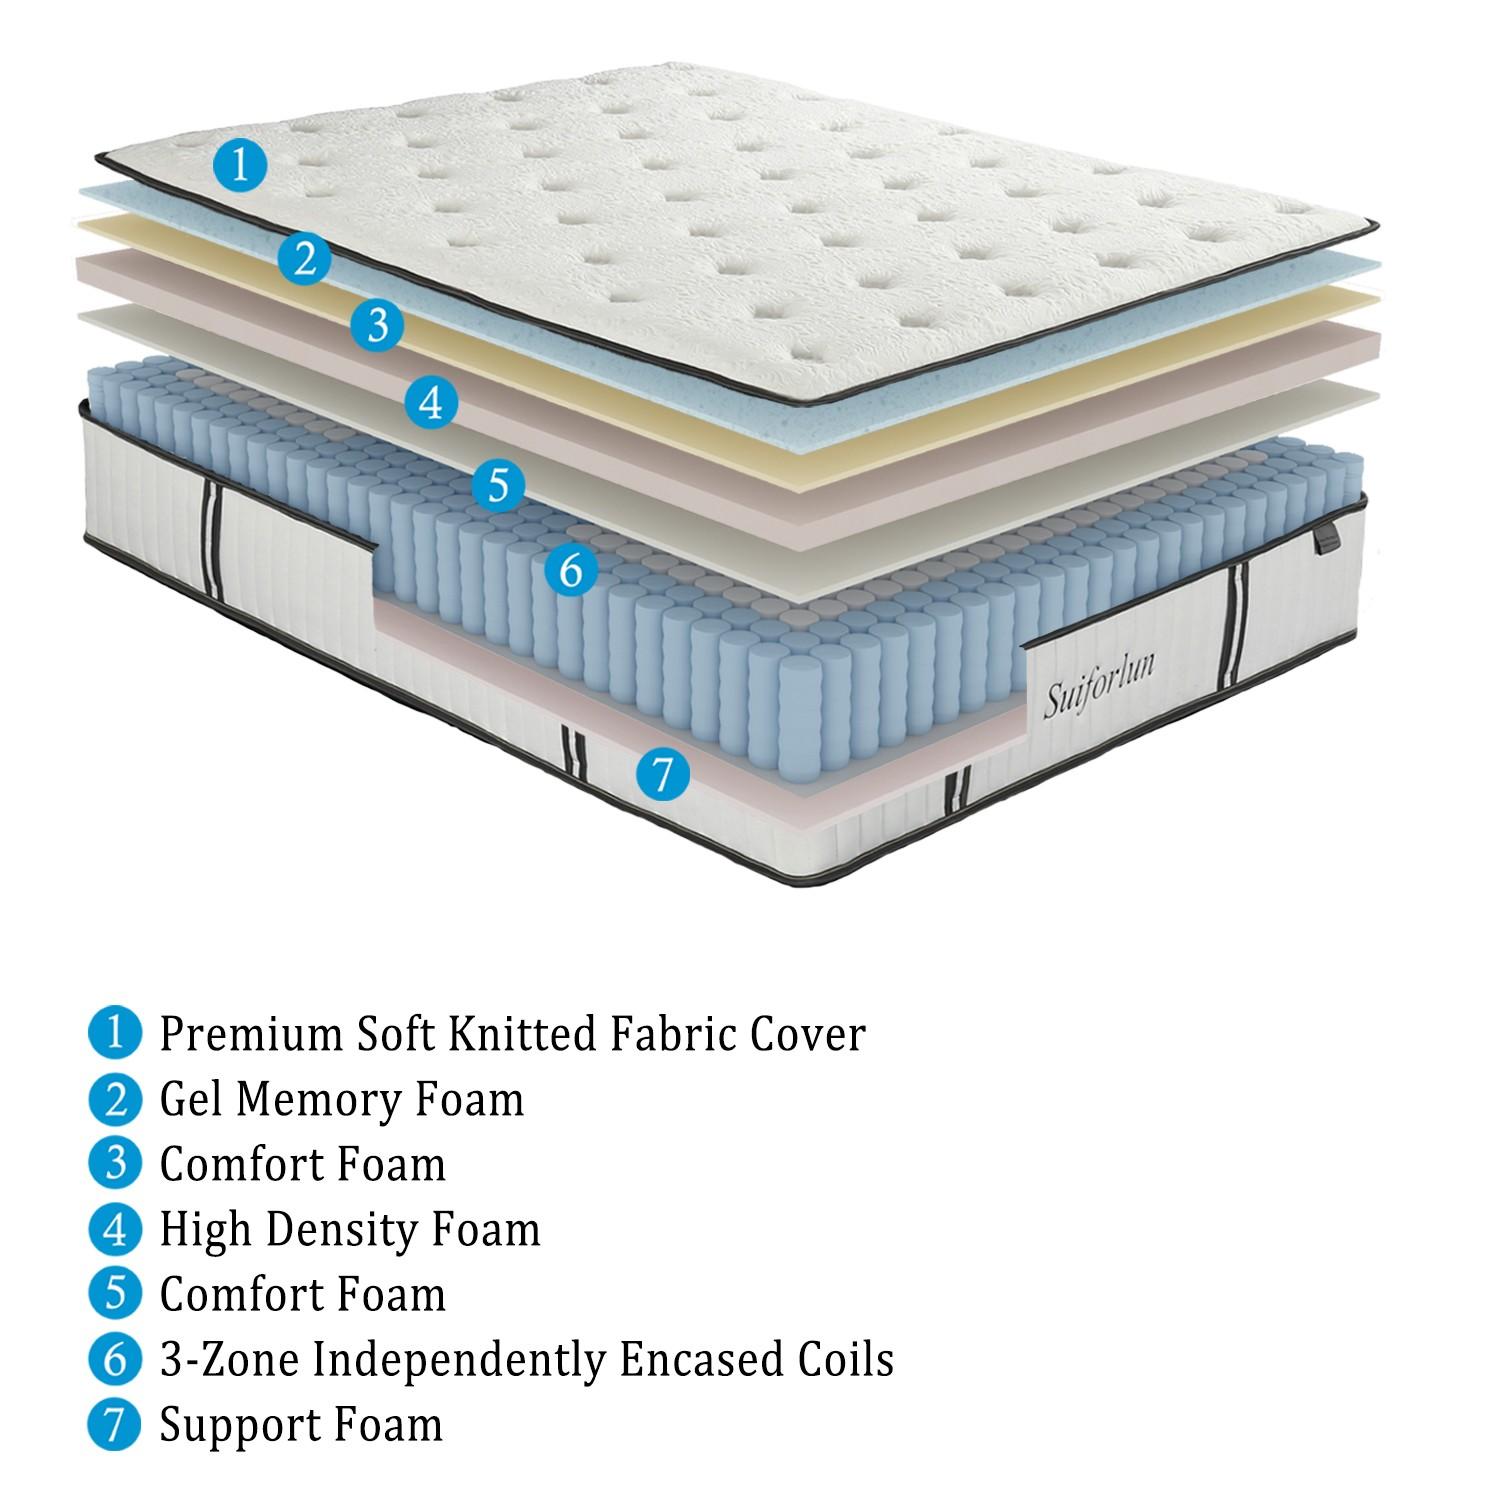 Suiforlun mattress inexpensive latex hybrid mattress-2